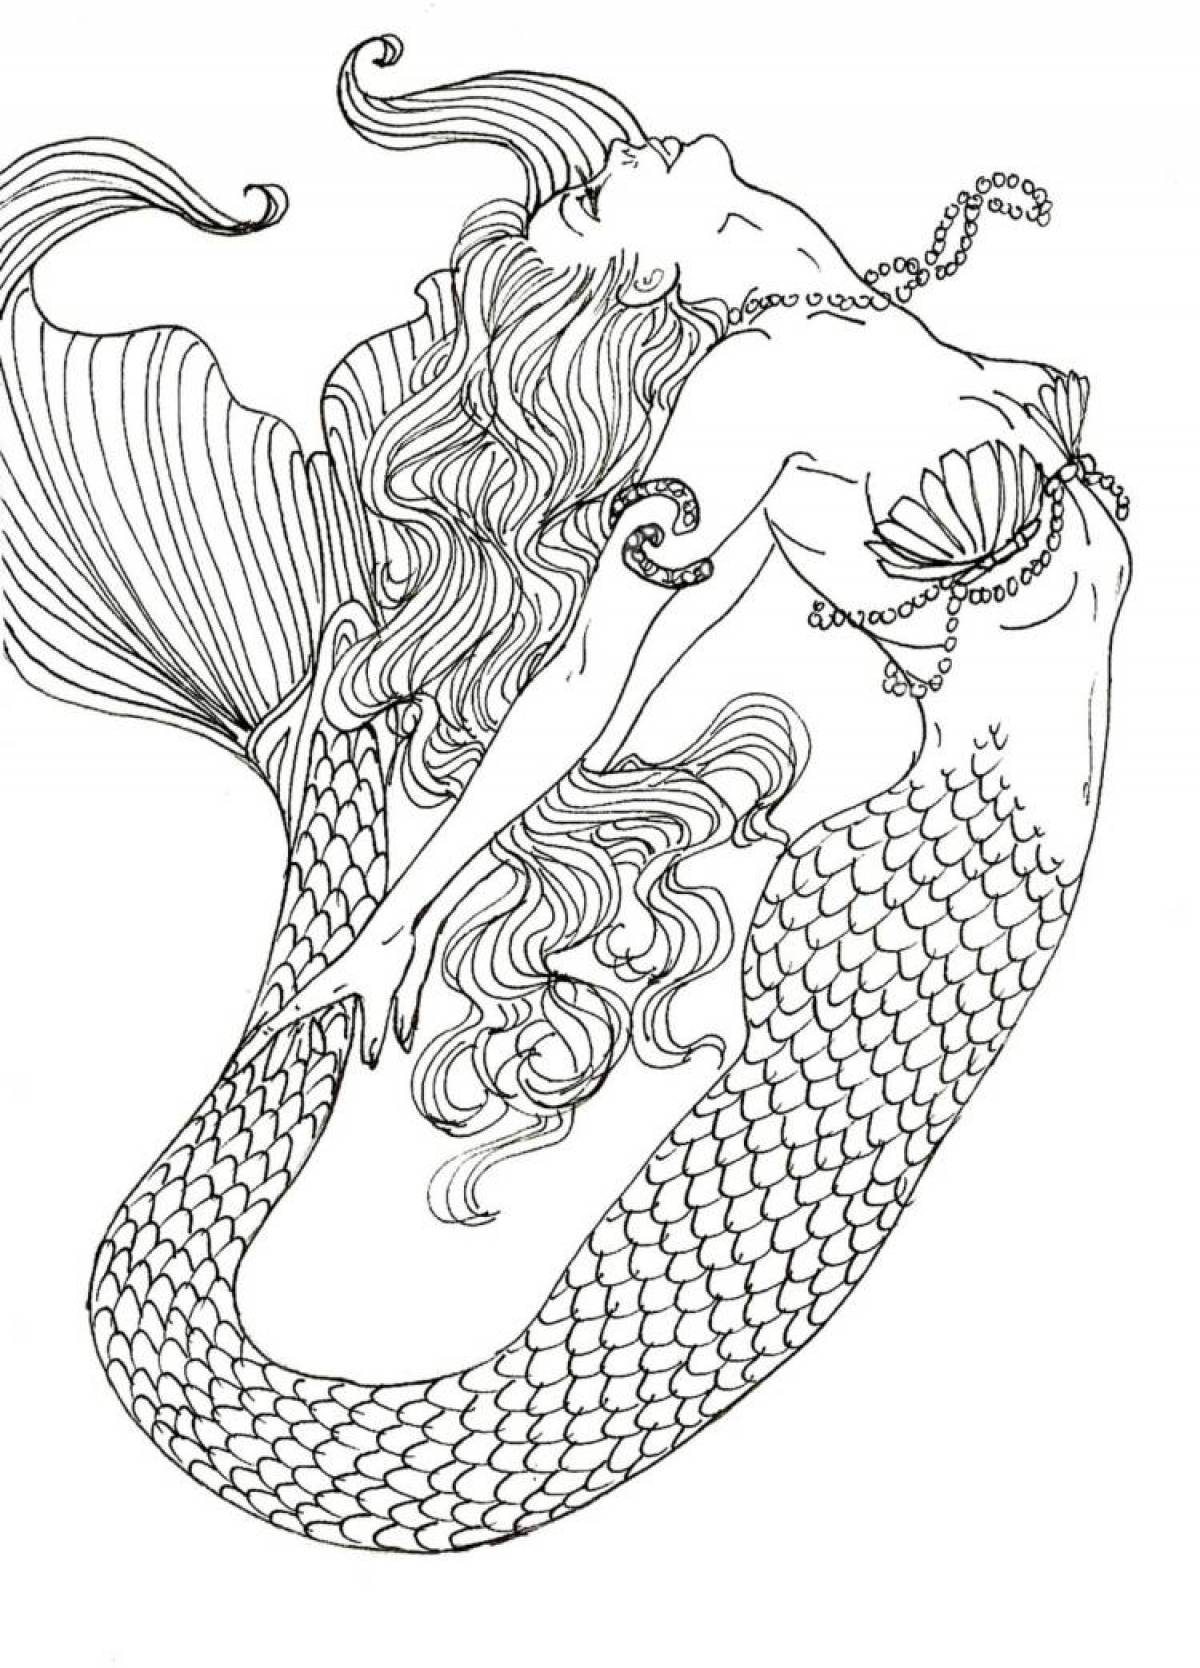 Luminous mermaid coloring book